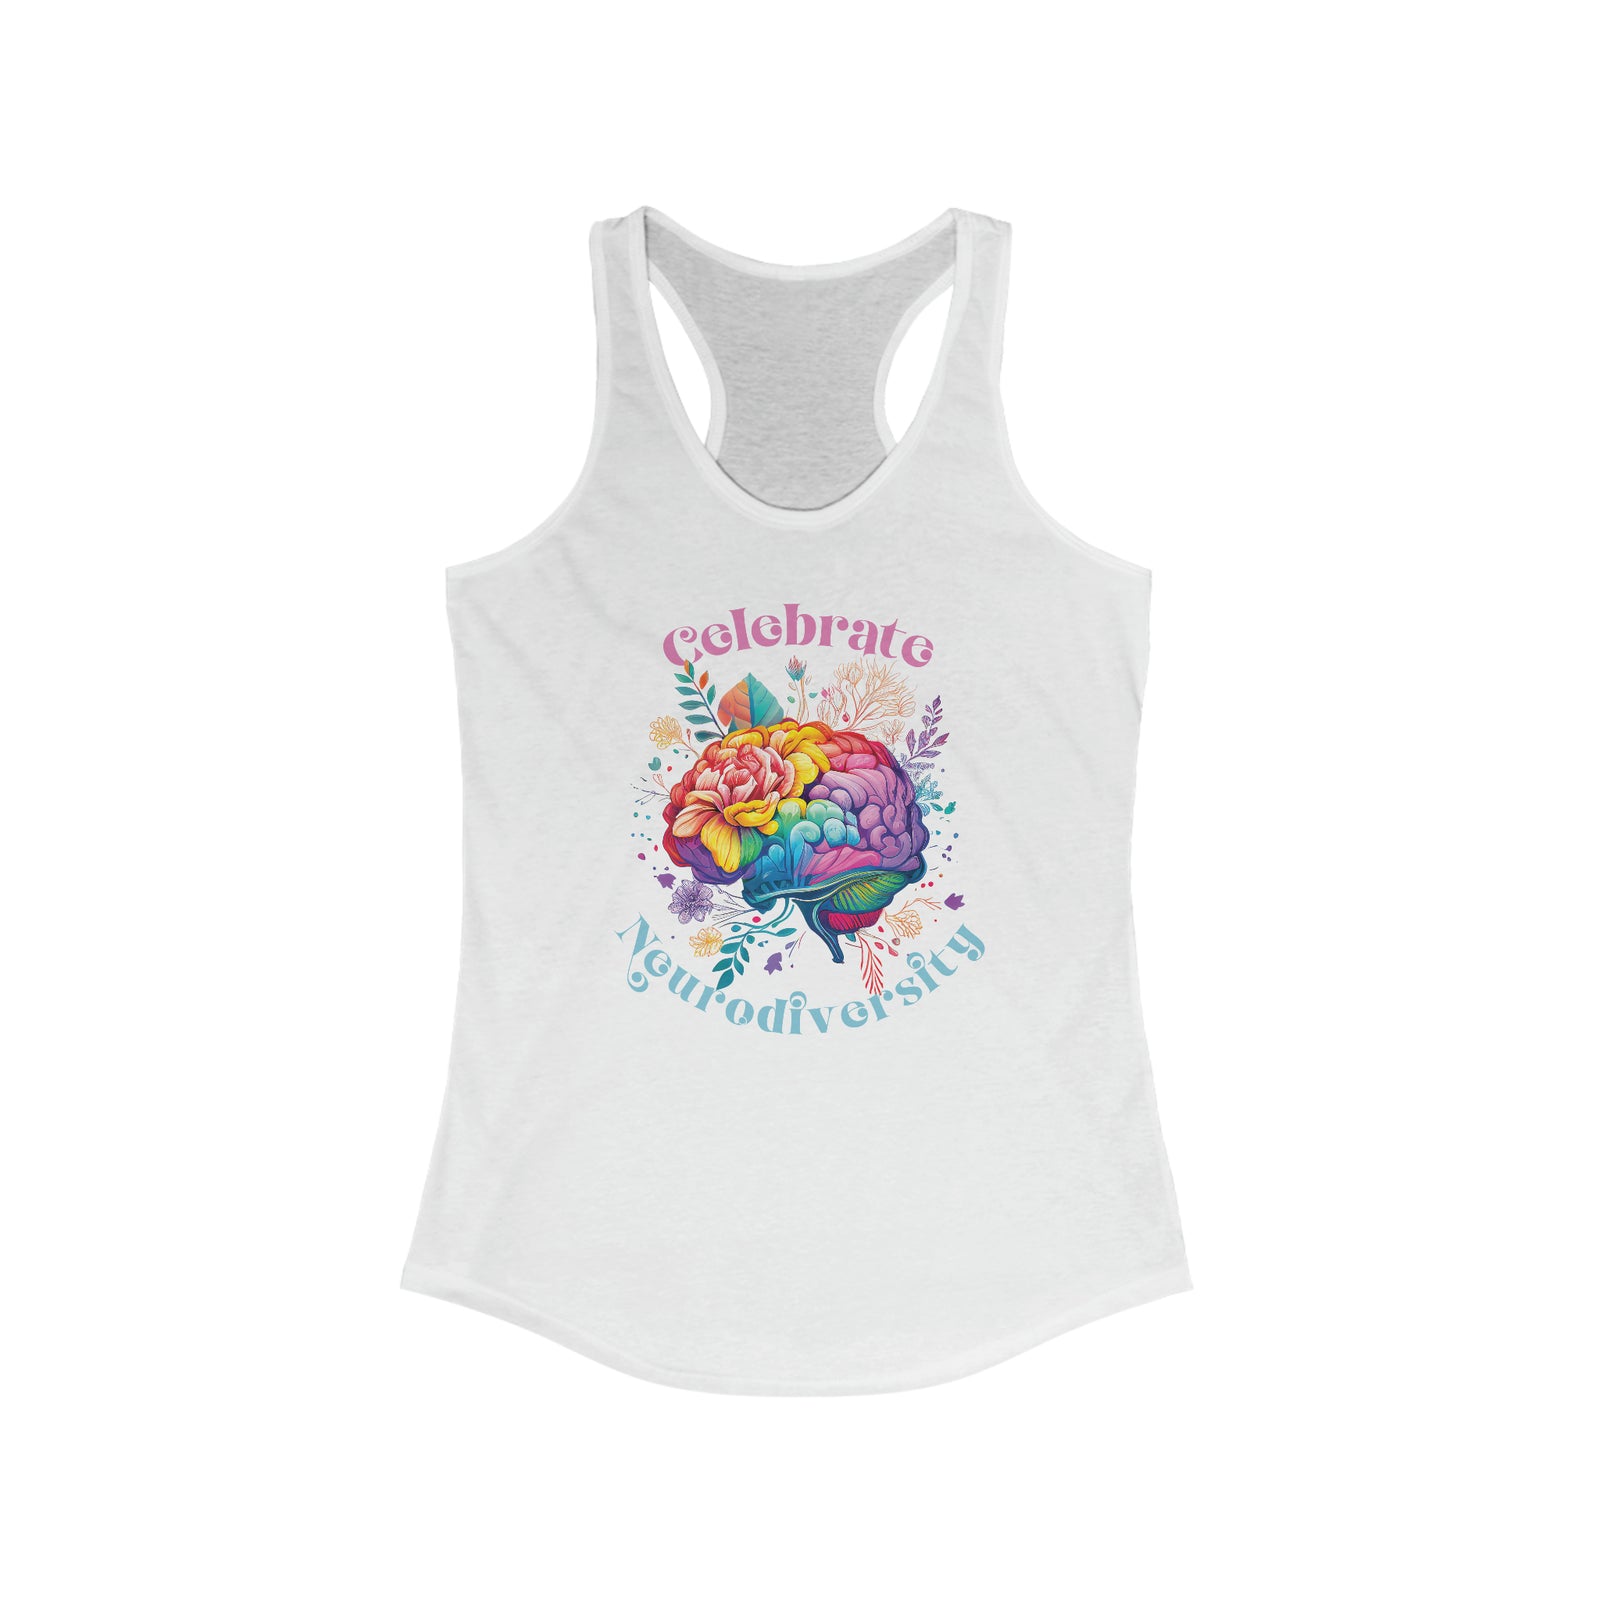 Celebrate Neurodiversity Shirt | Autism Shirt | Autism Awareness Shirt | Inclusion Shirt | Brain Art | Super Soft Tshirt | Women's Slim Fit Racerback Tank Top